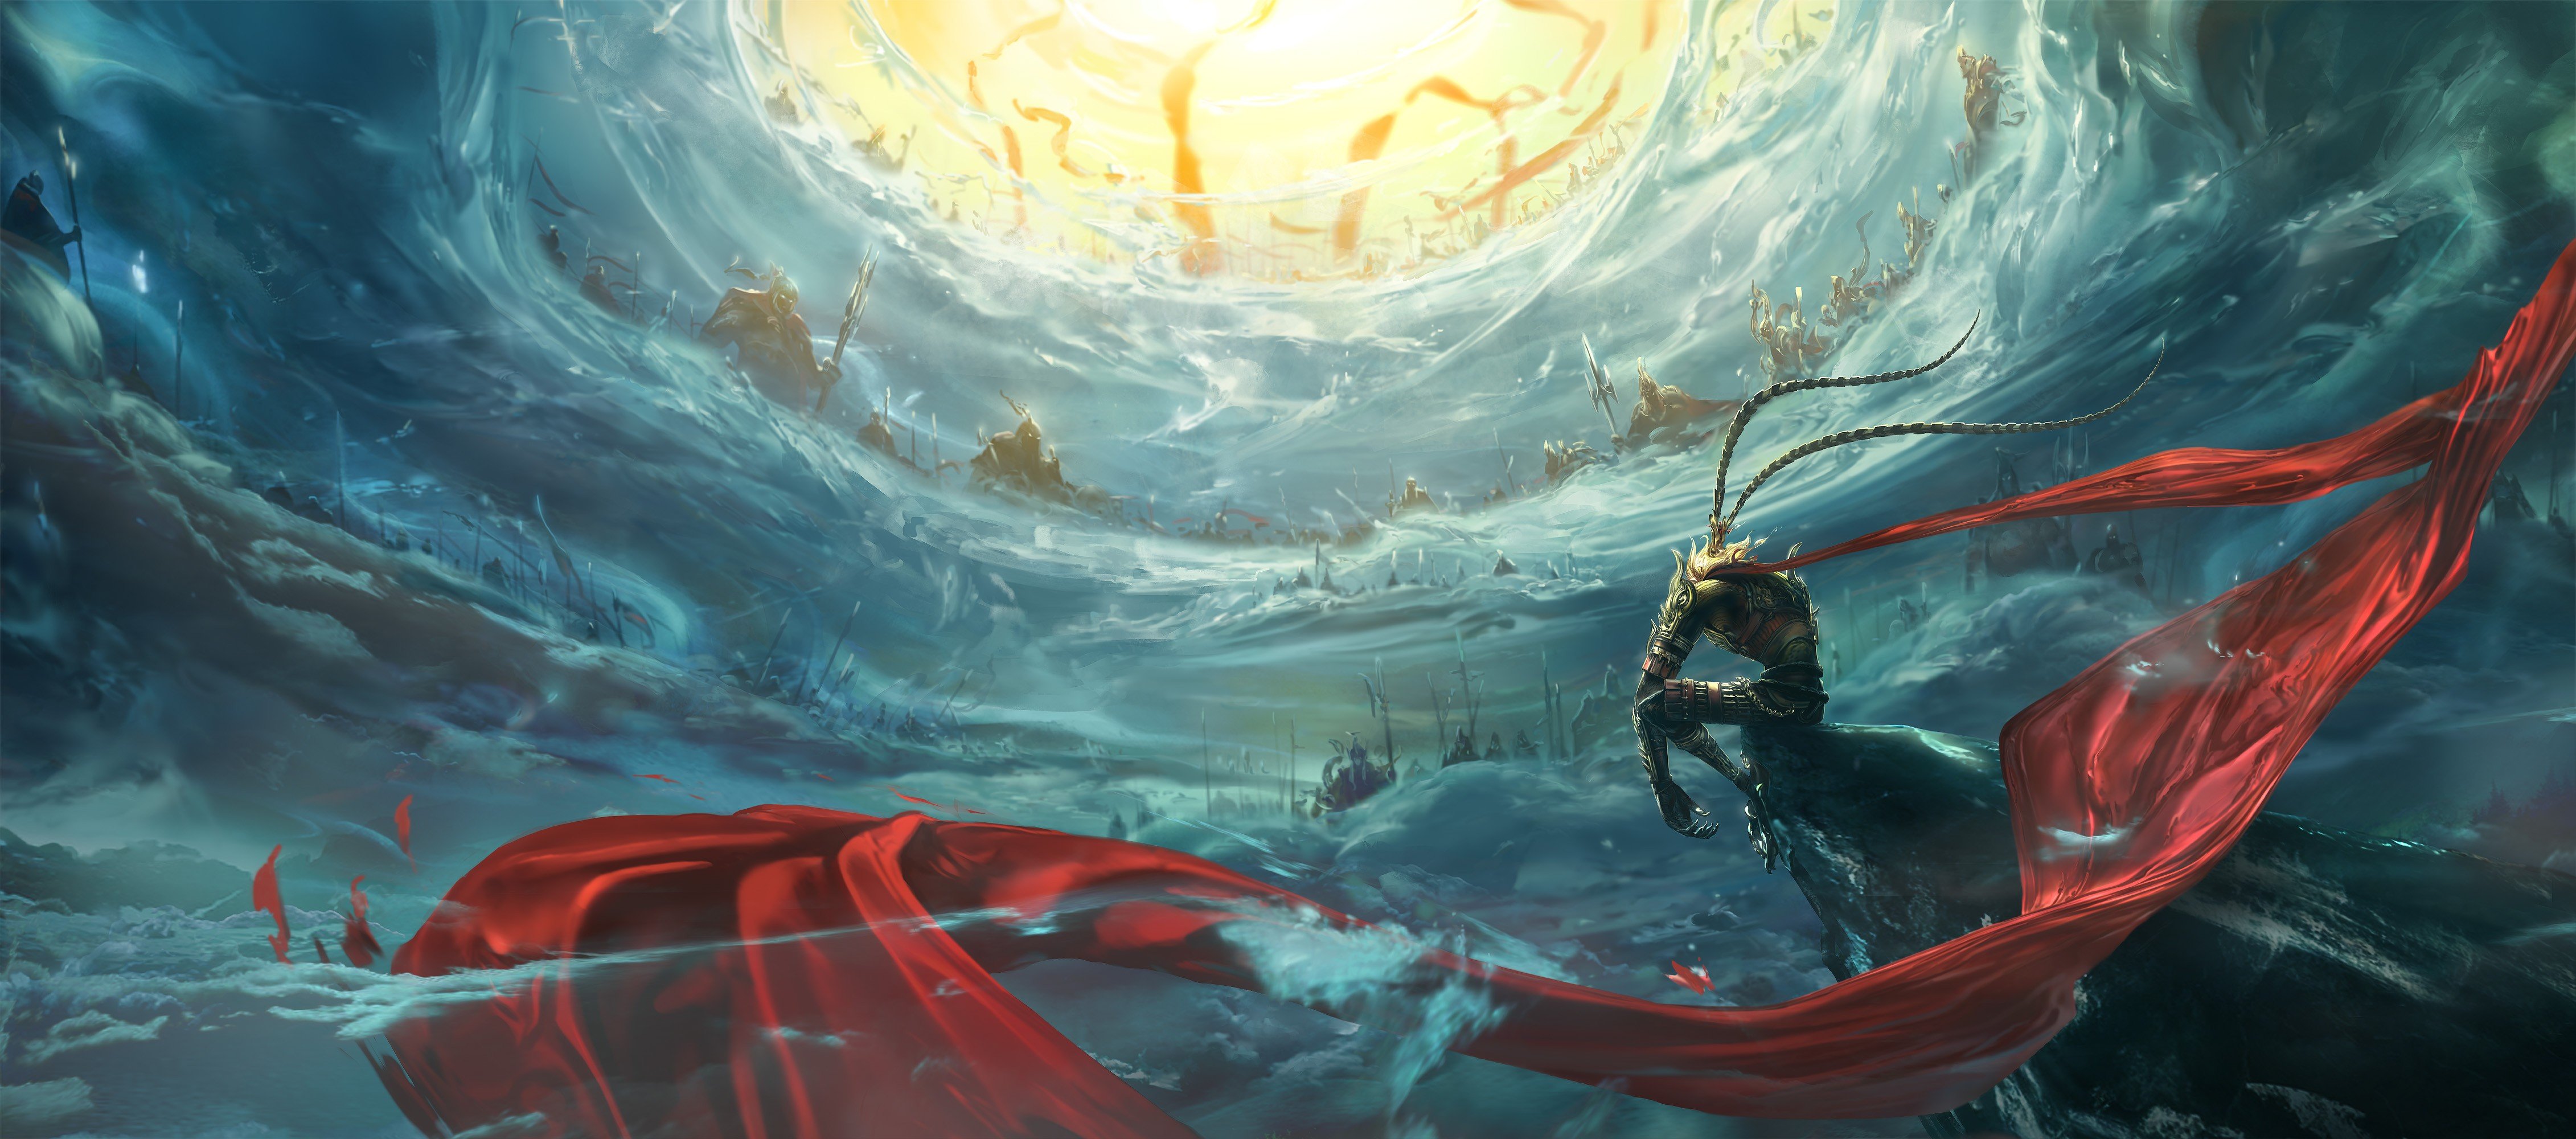 mono rey fondo de pantalla,cg artwork,agua,ilustración,ola,onda de viento